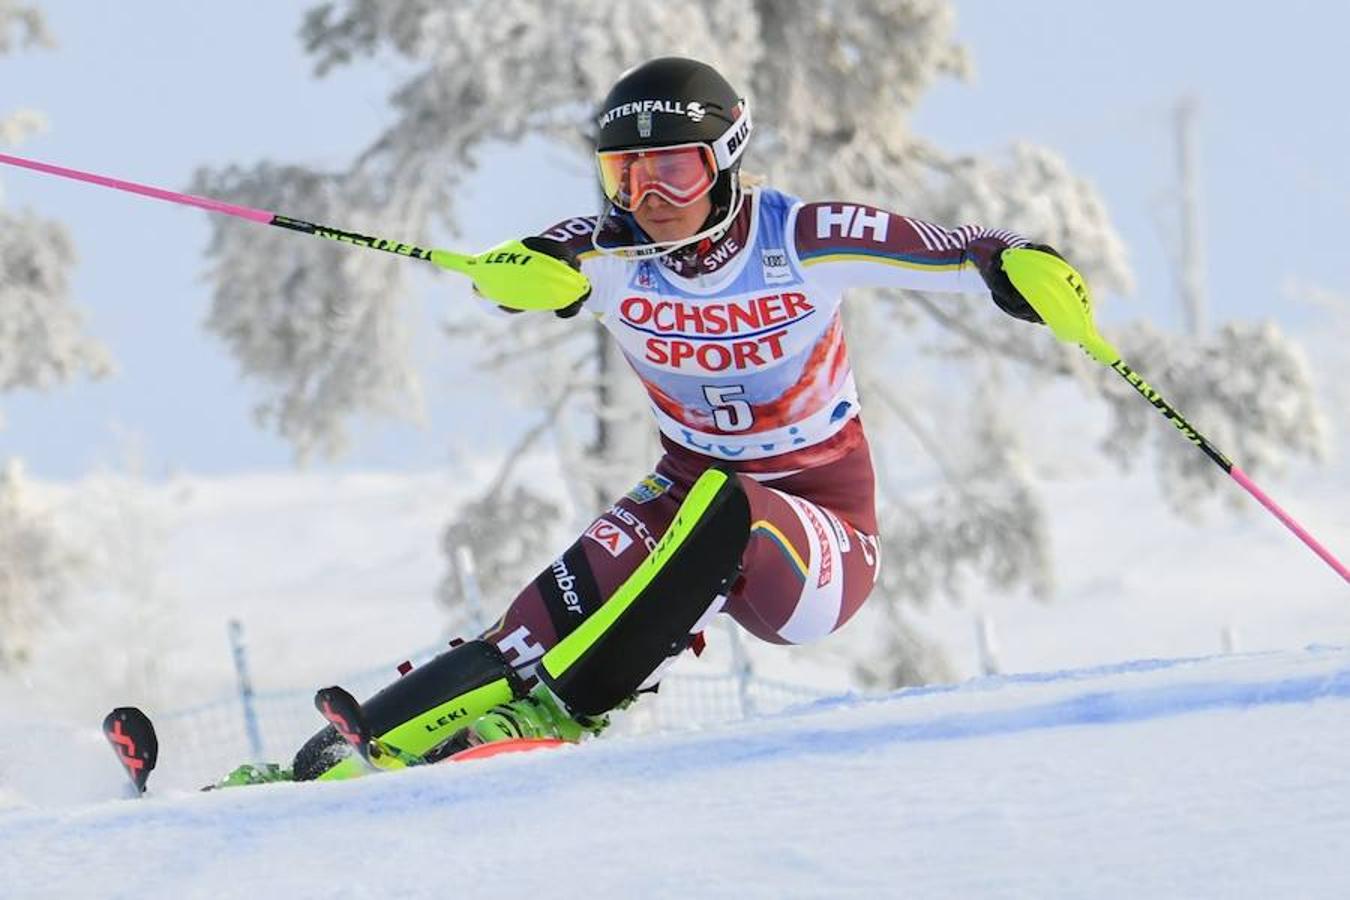 Este sábado se ha celebrado la primera carrera de slalom femenino de la temporada de la Copa del Mundo de esquí FIS en Levi, Finlandia.